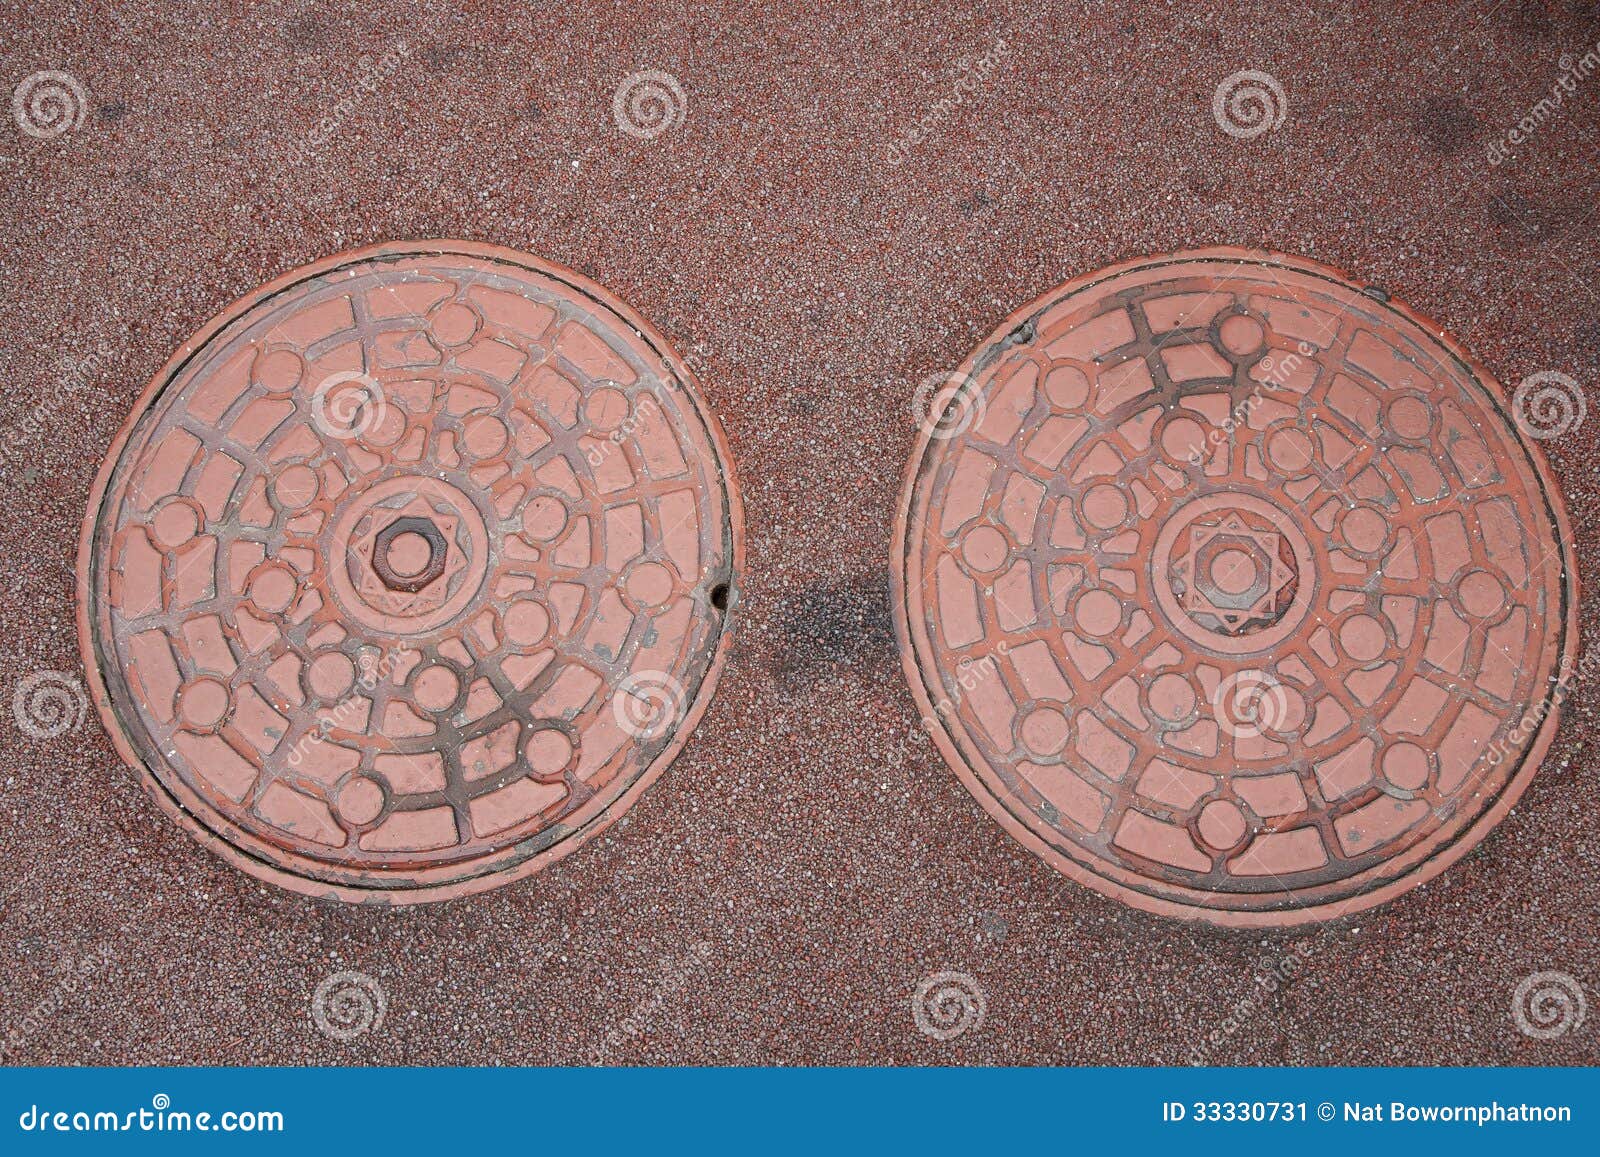 Twin Manhole cover on ground,Seoul,Korea